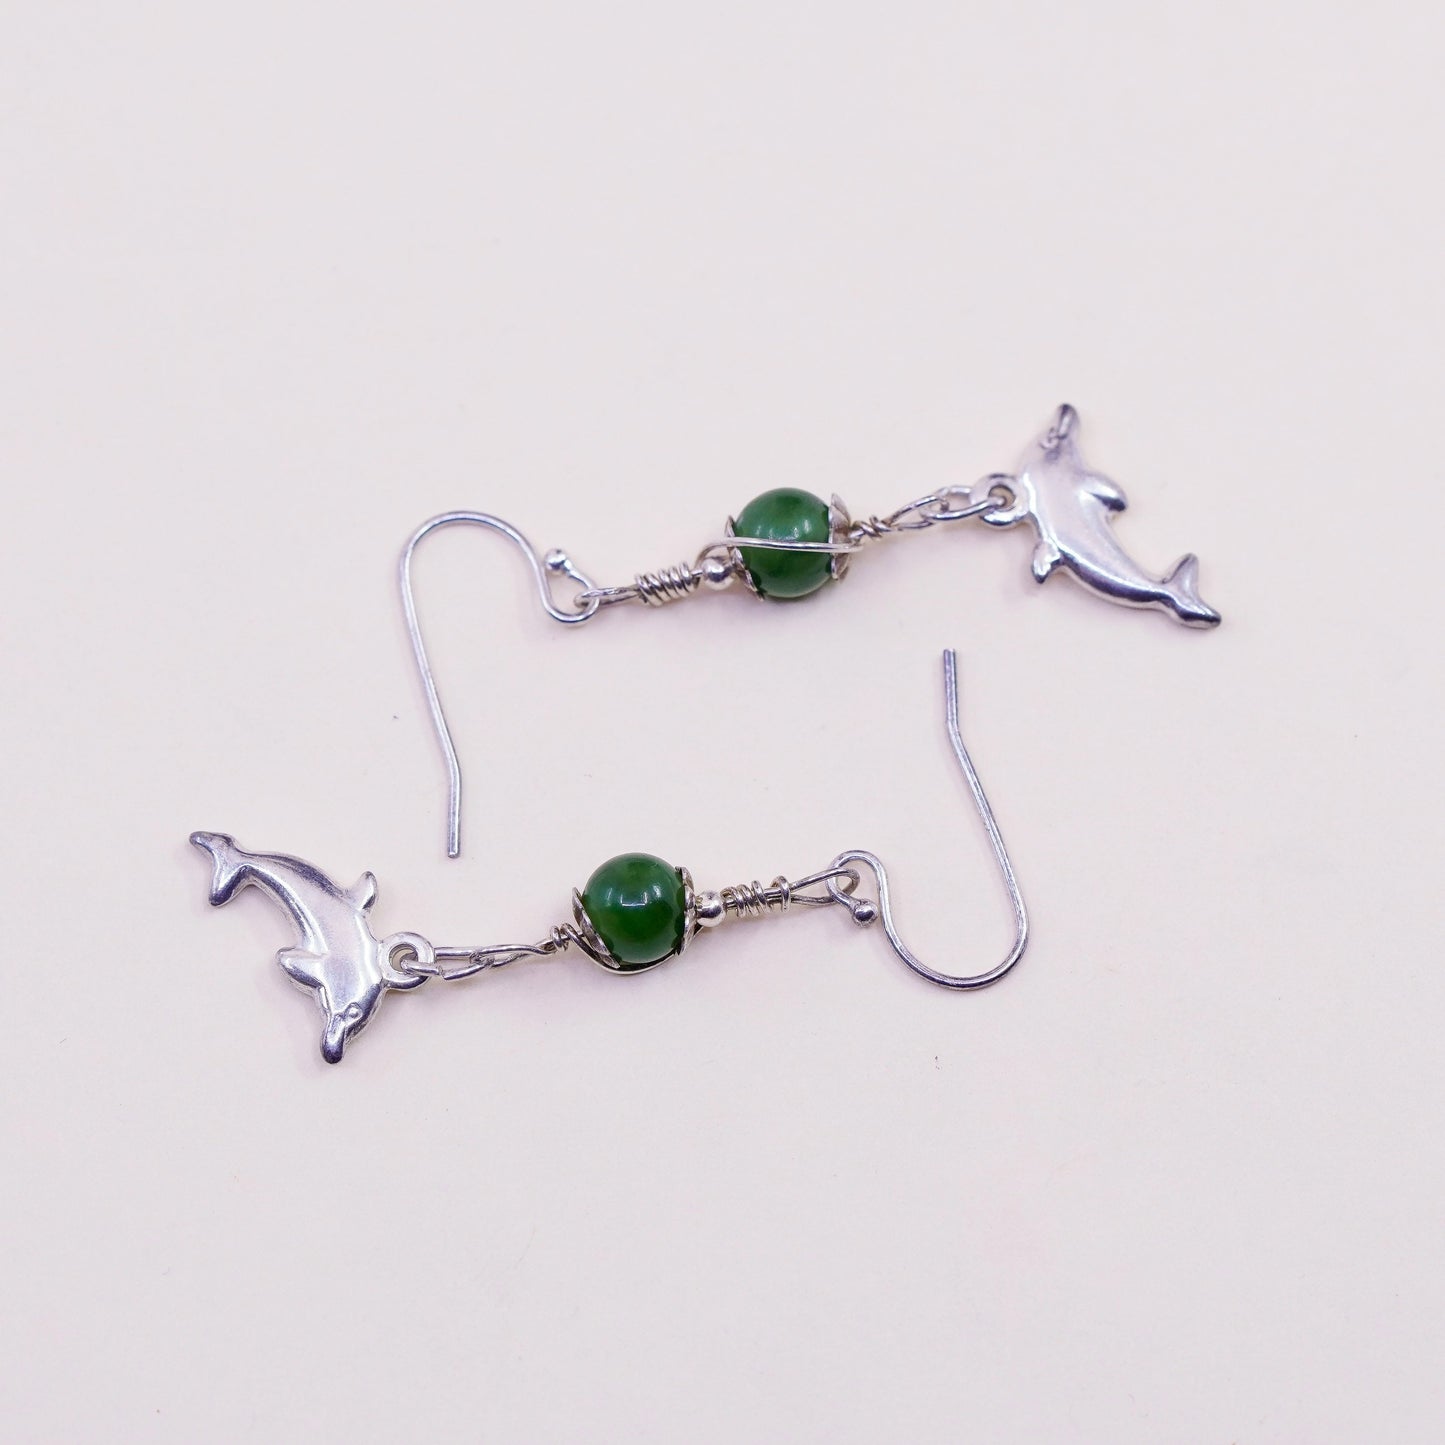 Vintage sterling 925 silver handmade dolphin drop earrings with jade bead